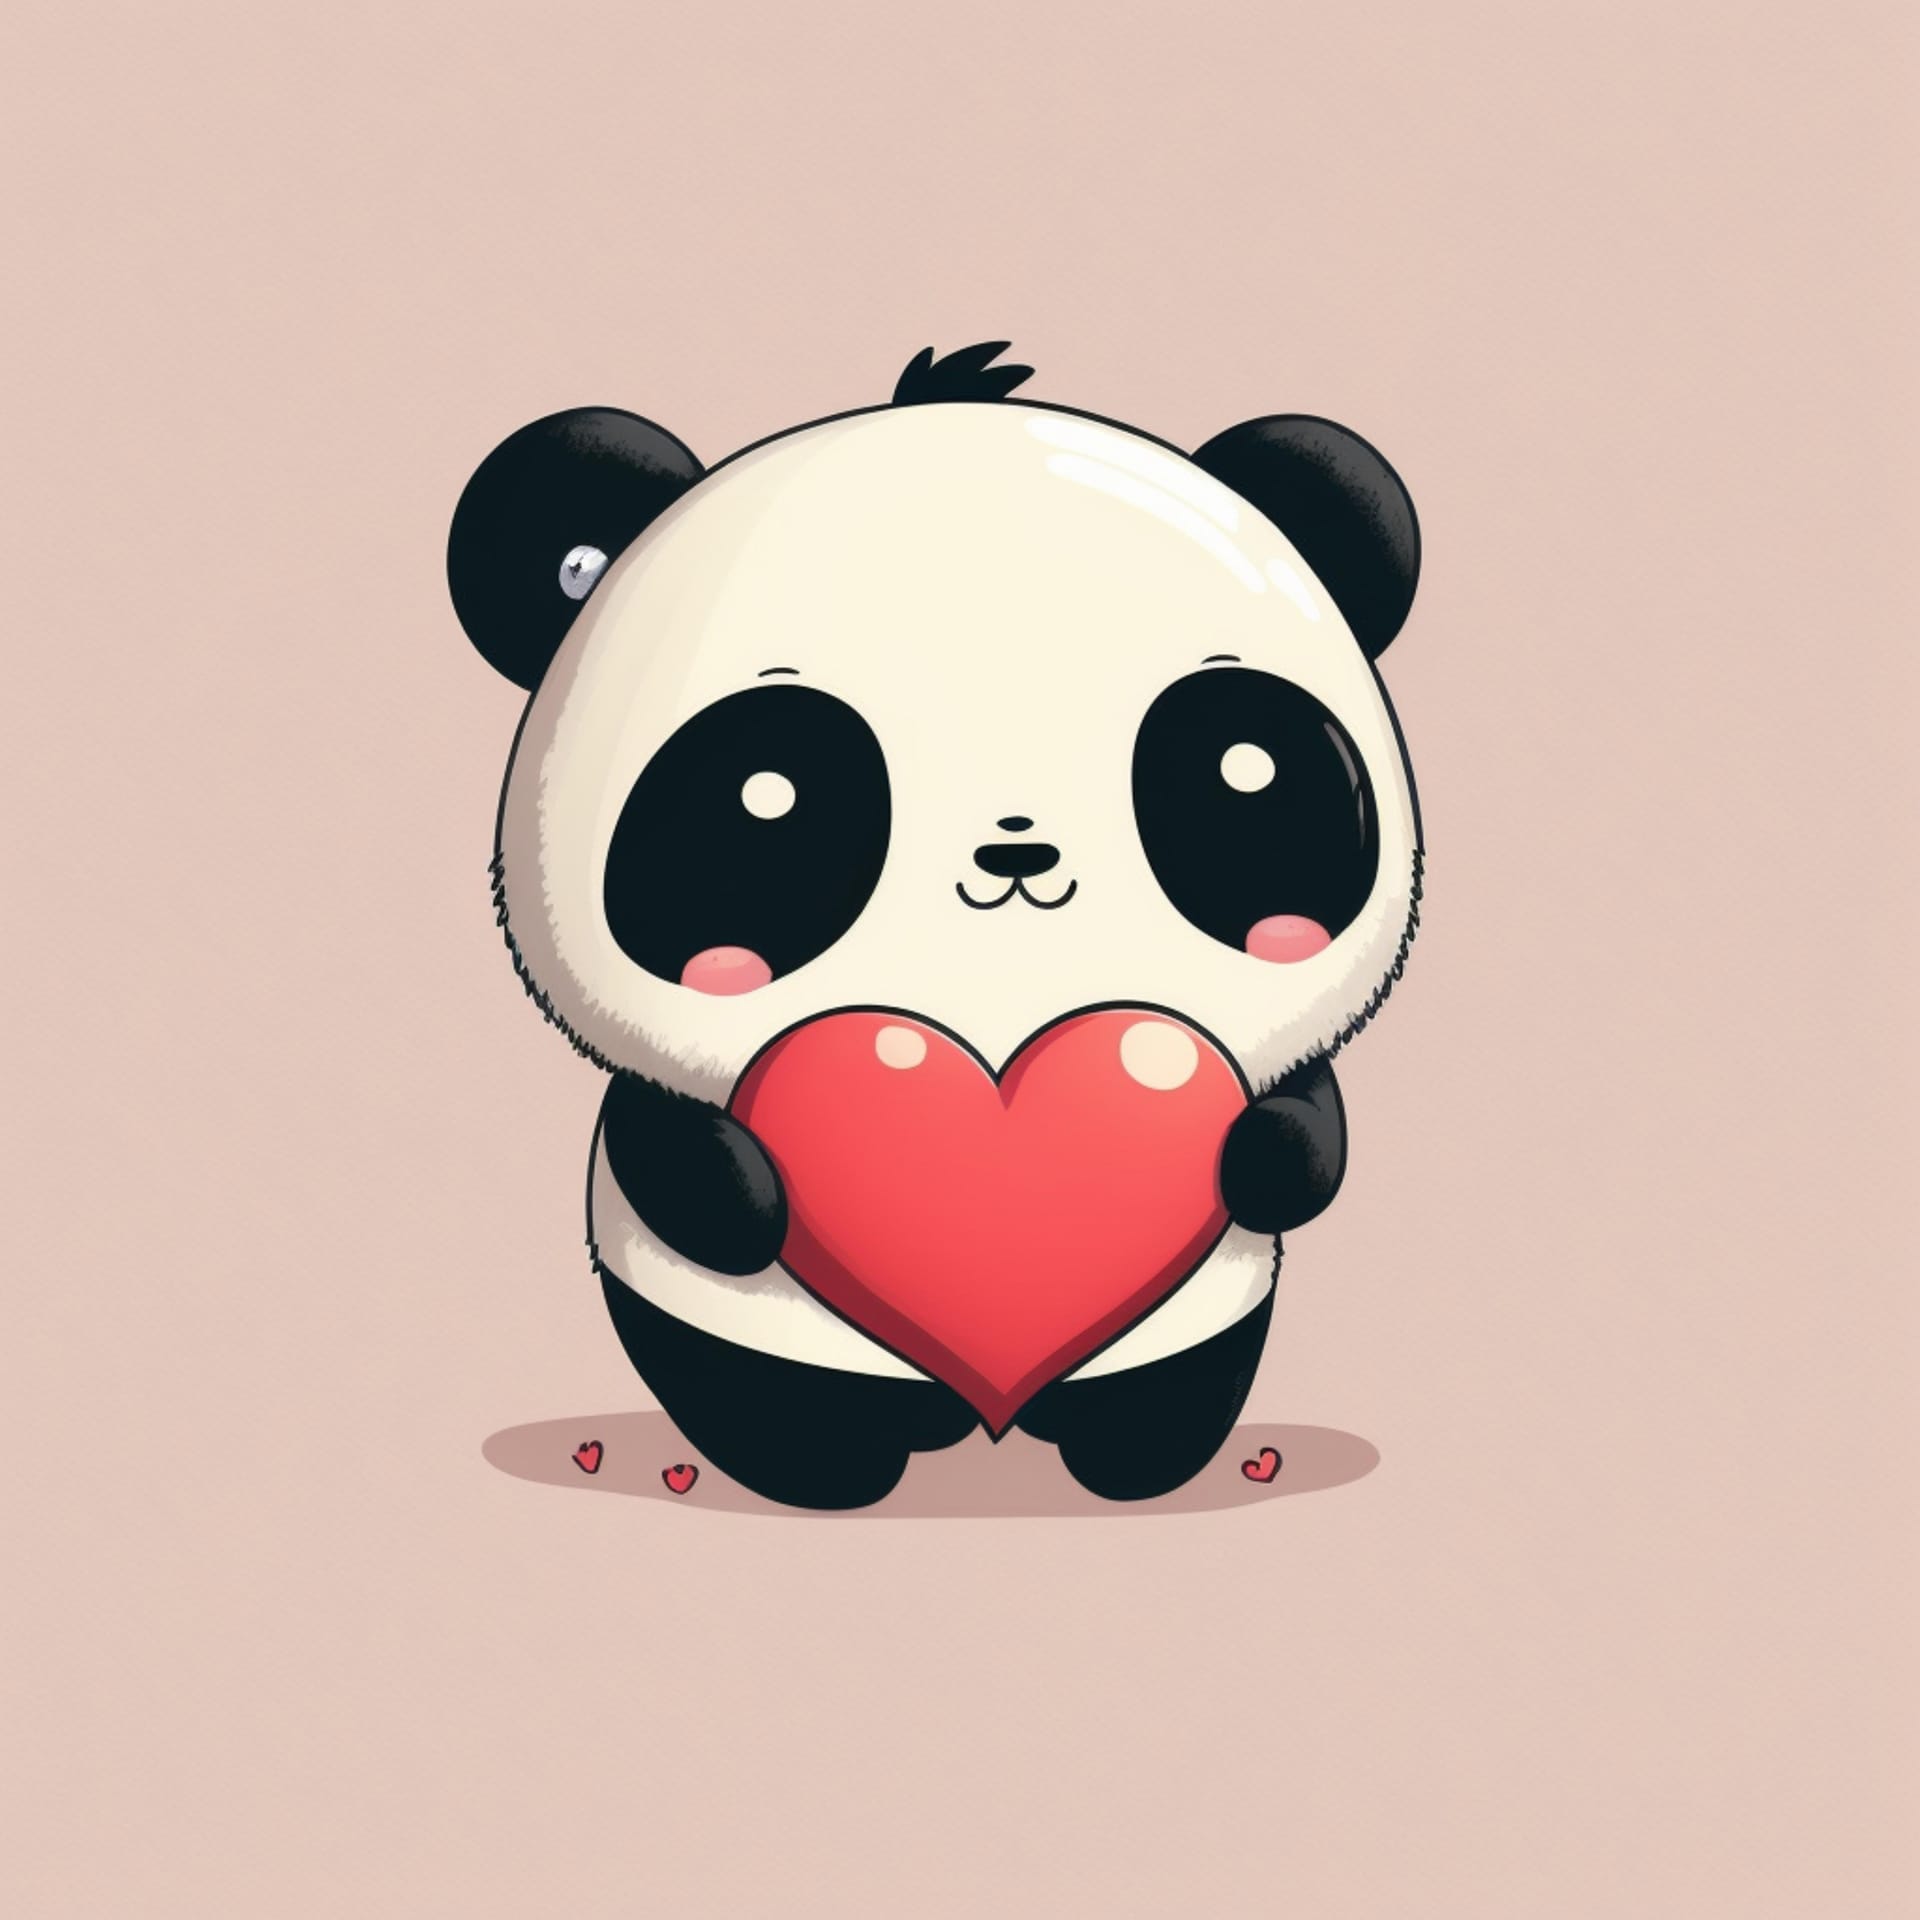 Kawaii panda with heart valentines day image